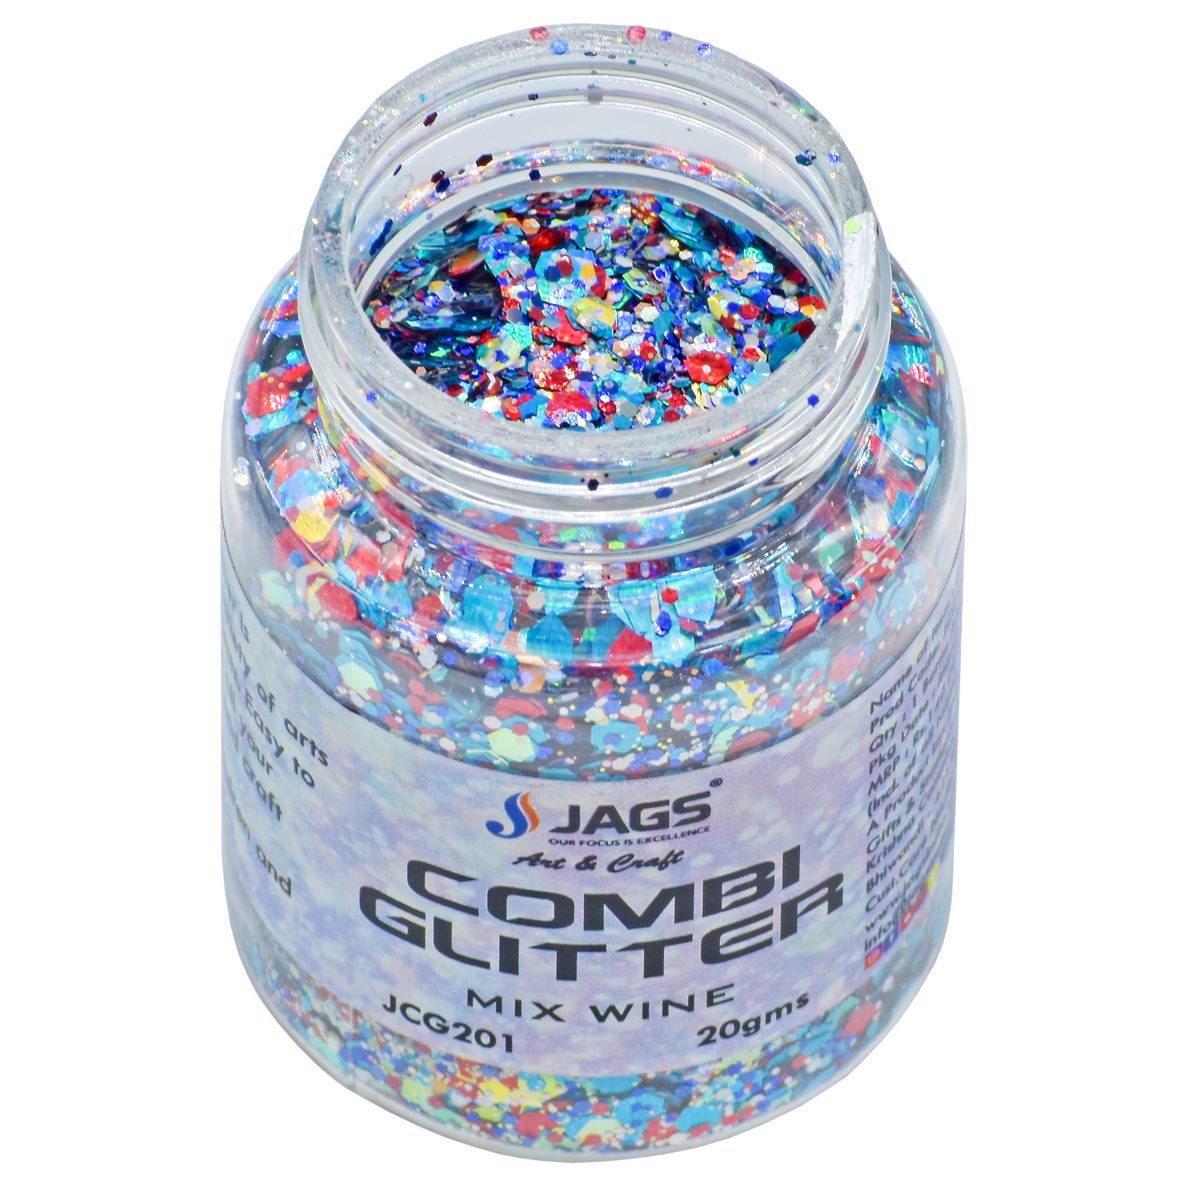 jags-mumbai Glitter Powder Jags Combi Glitter | 20Gsm | Mix Wine